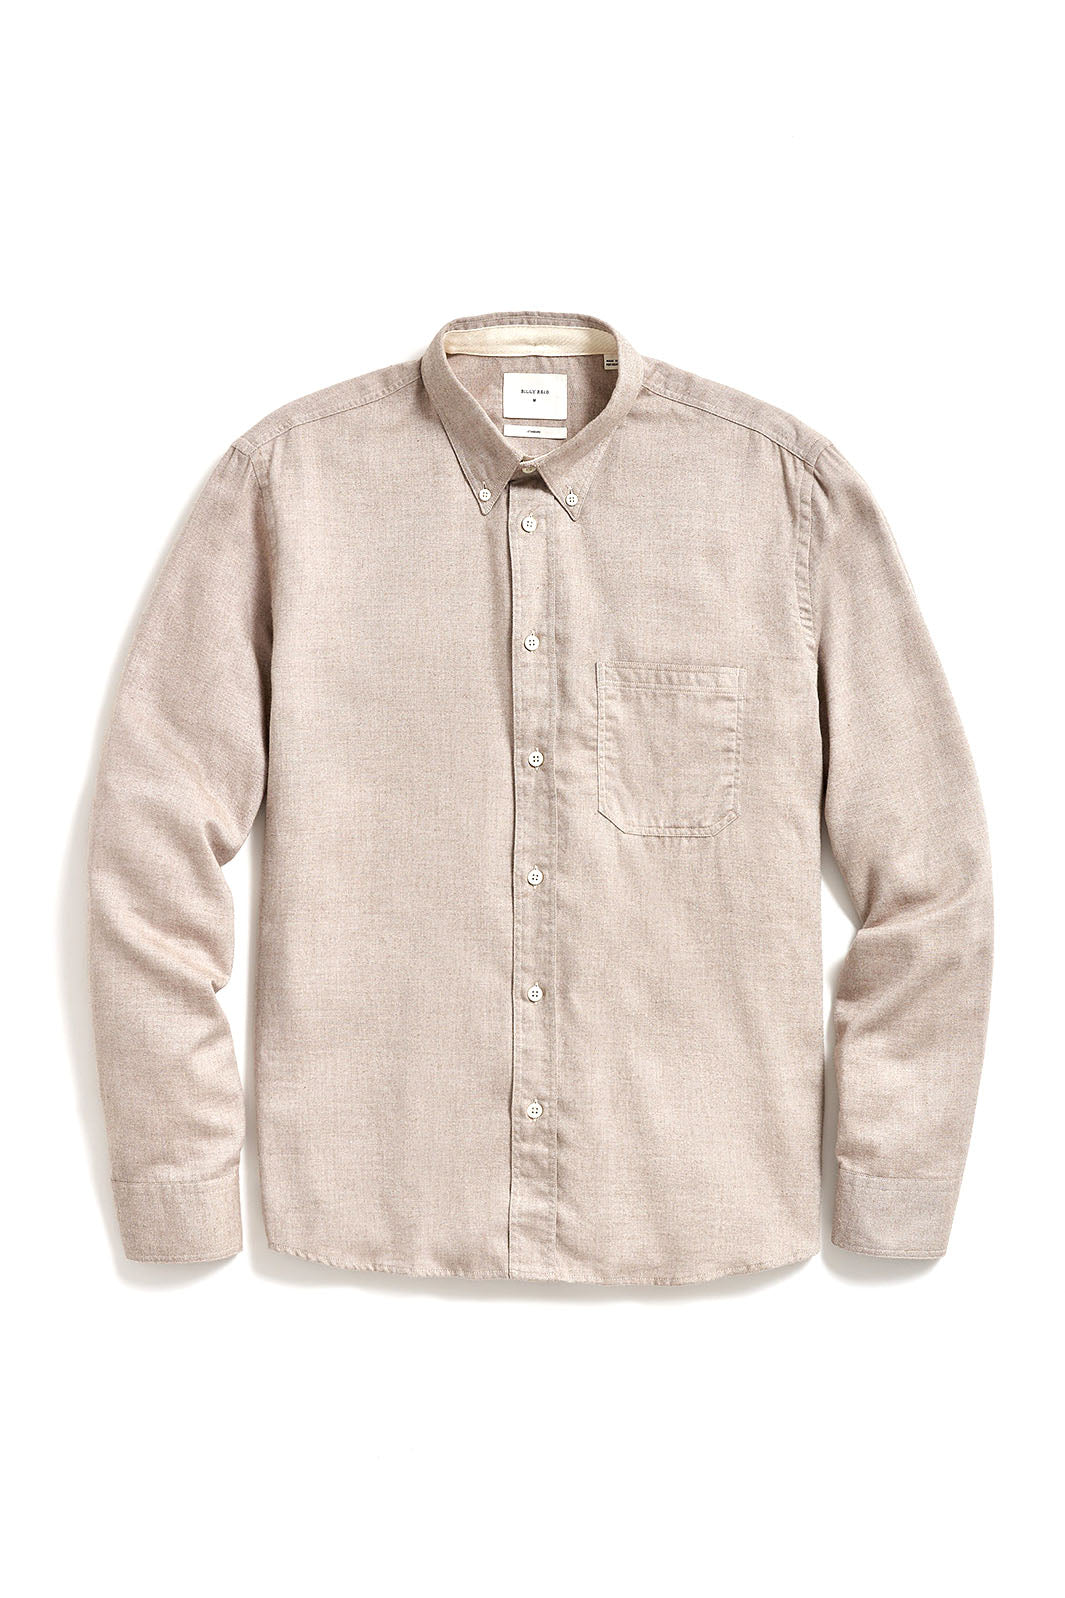 Tan, cream, off-white long sleeve button up men's shirt 